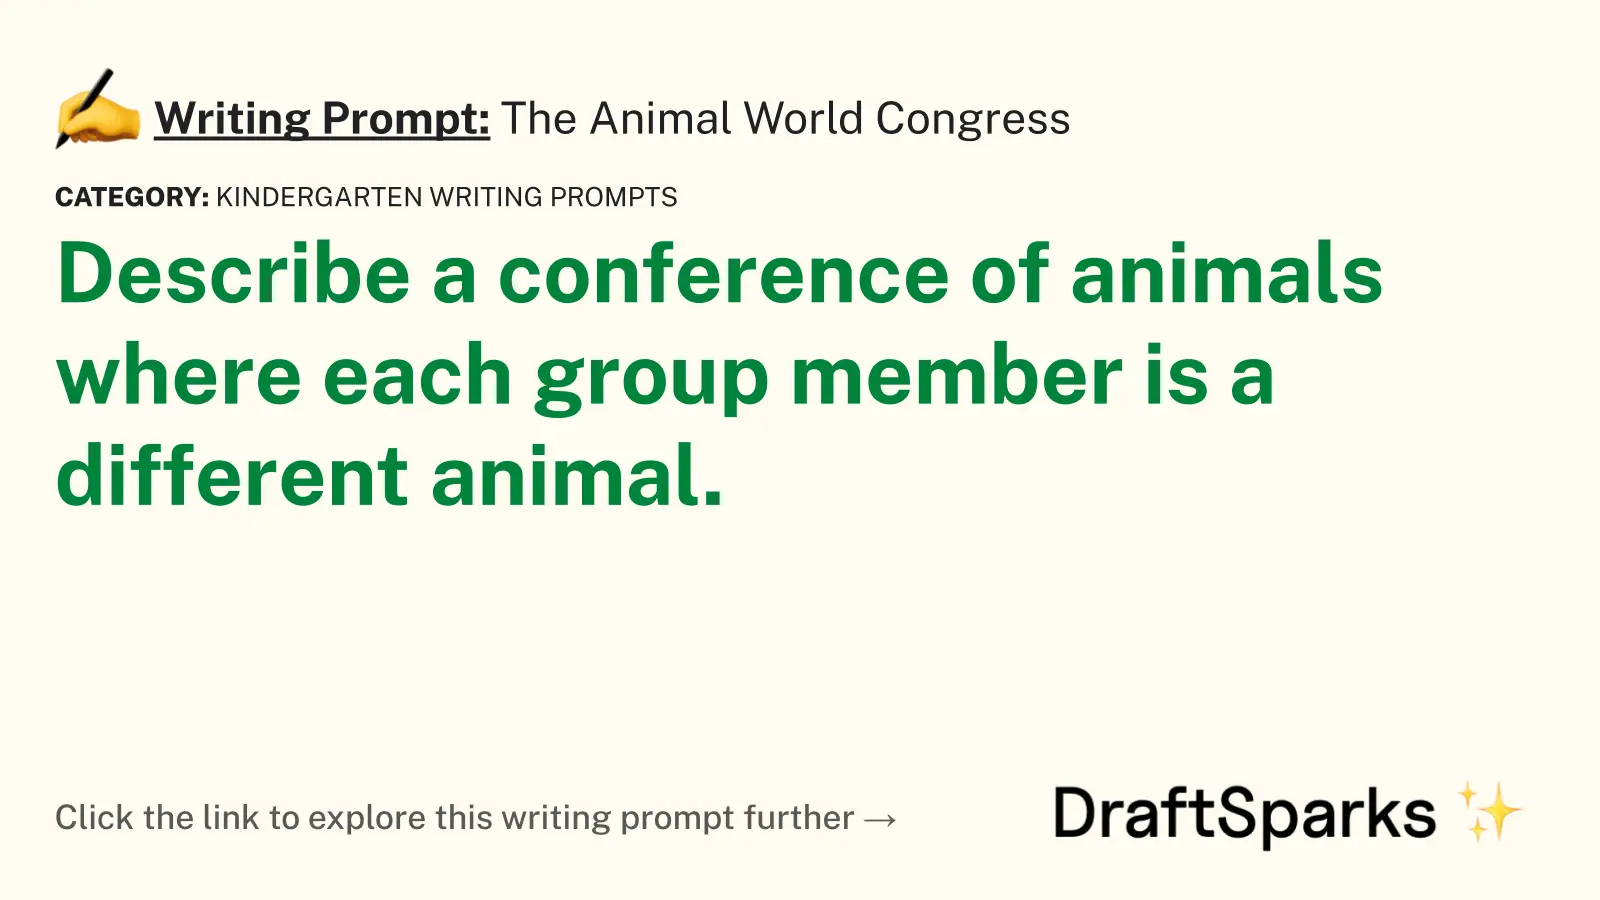 The Animal World Congress